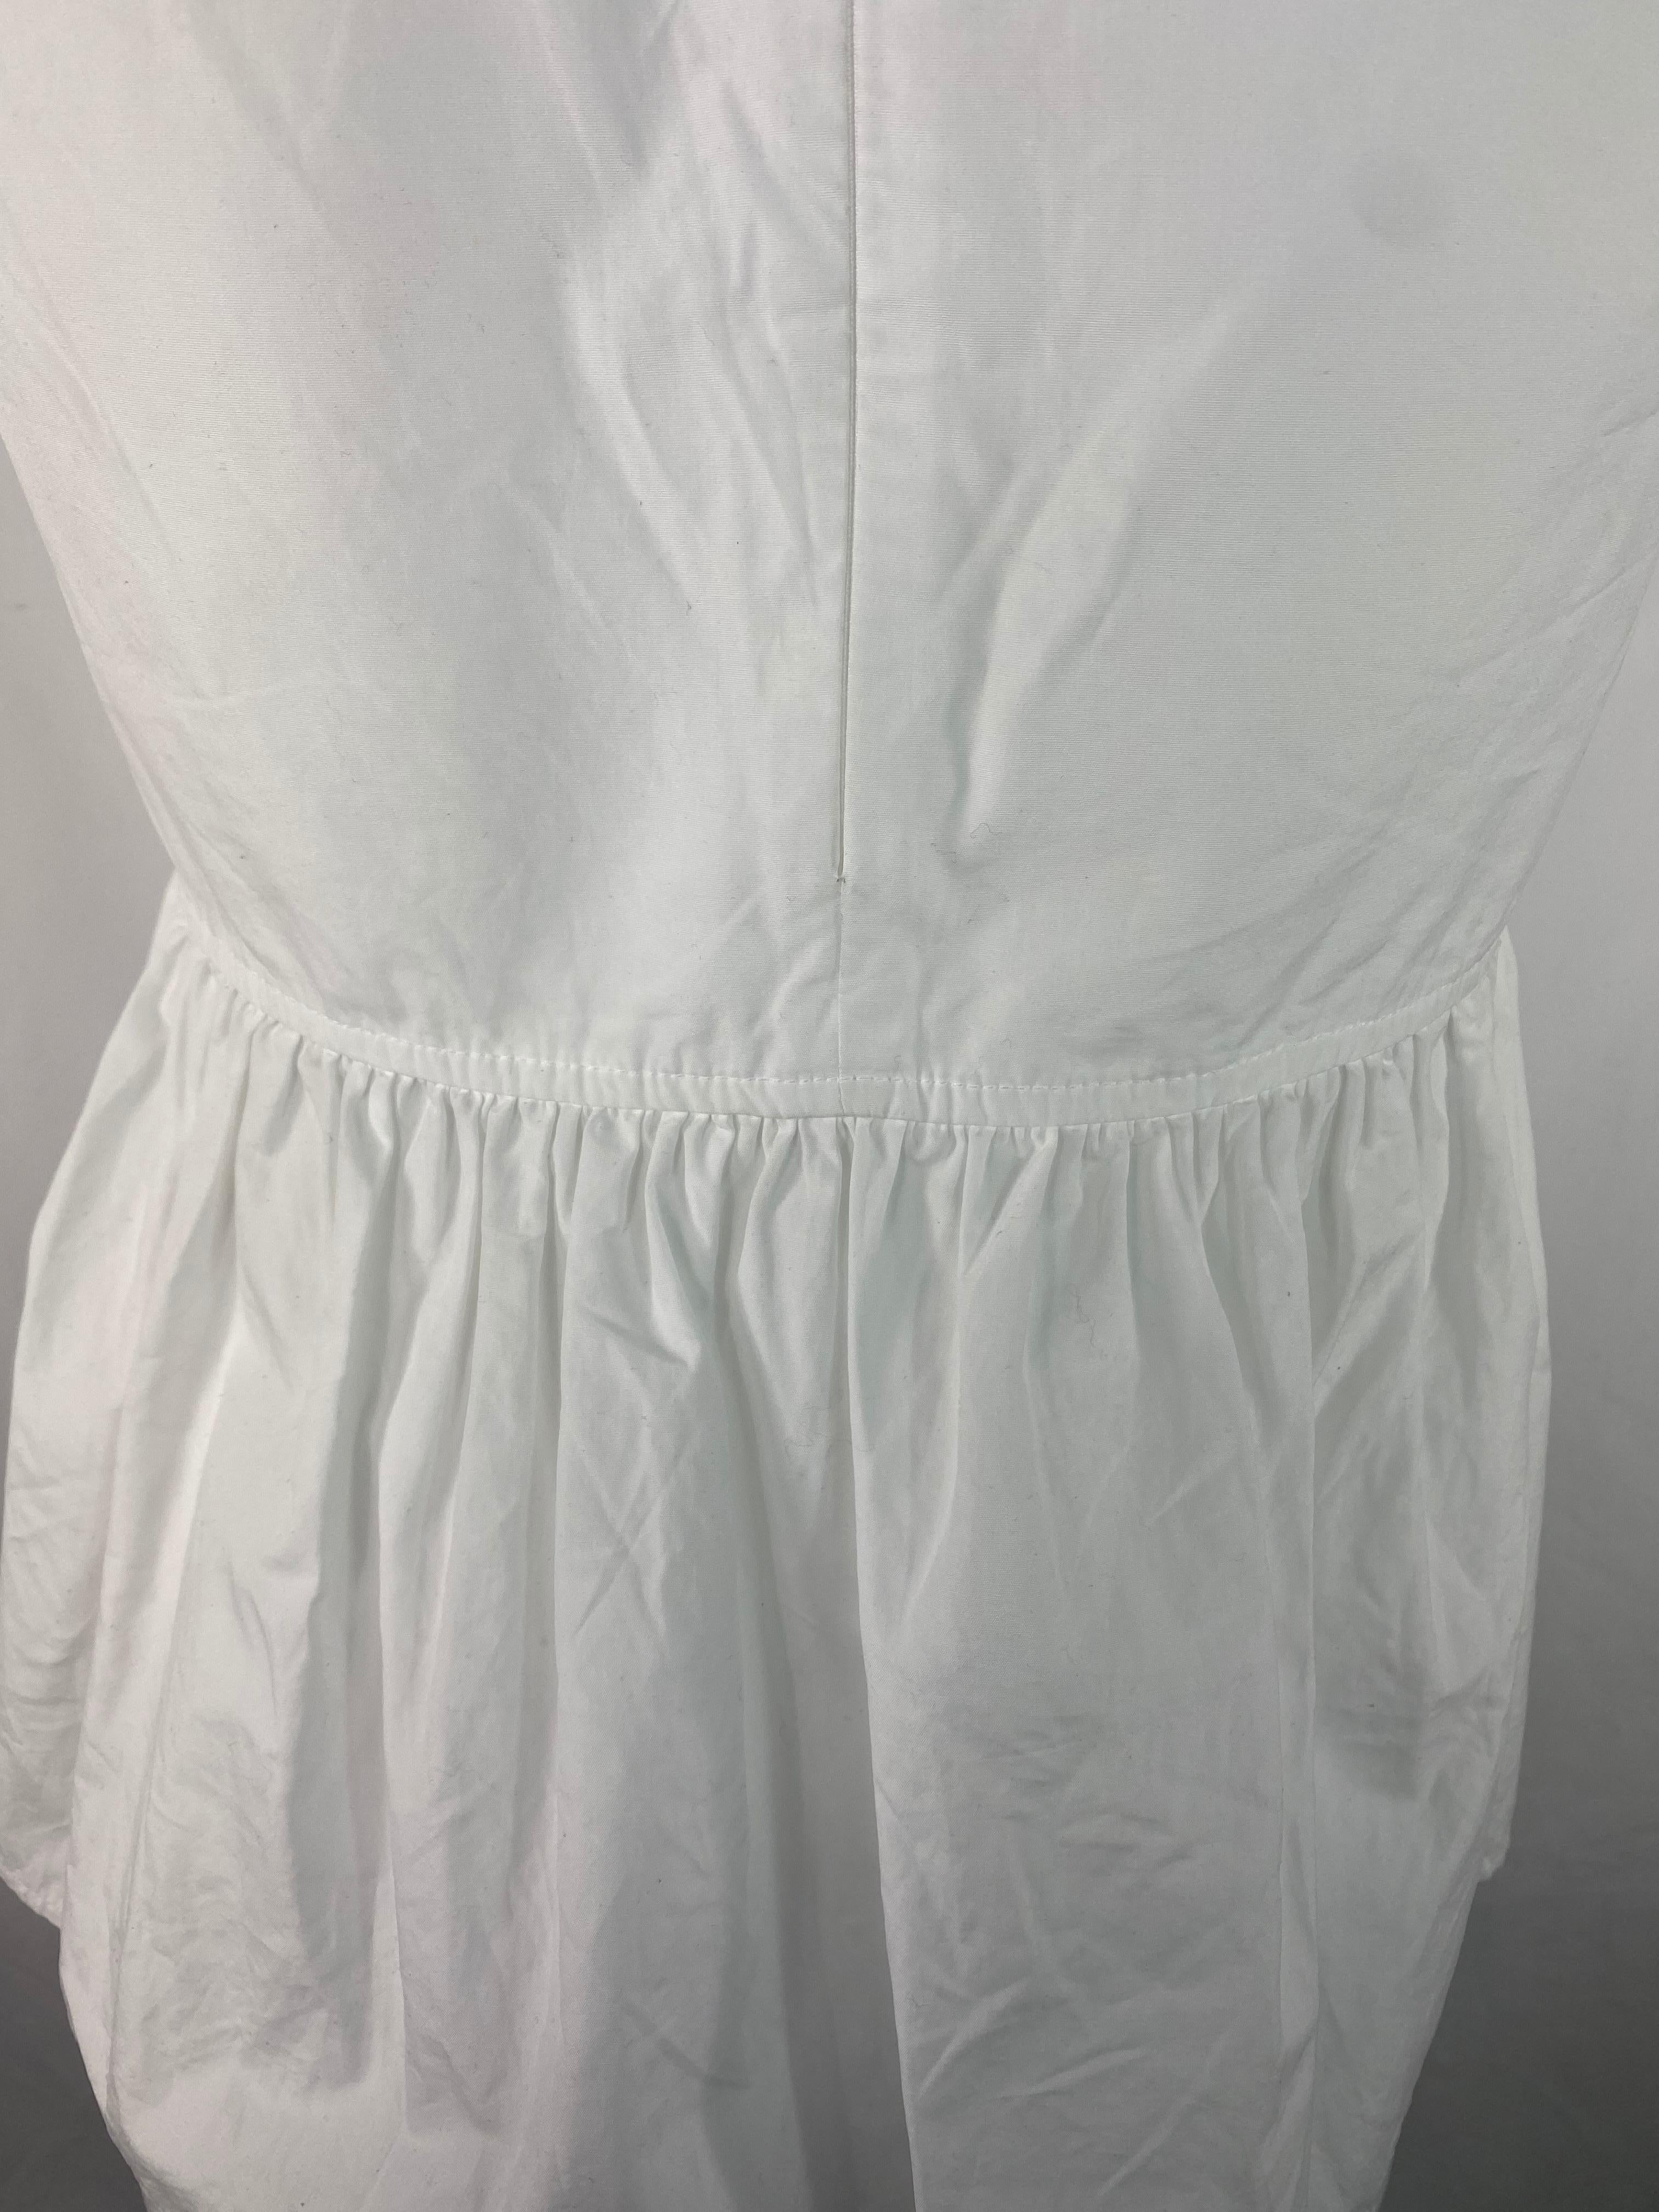 Gray MARNI  White Cotton Top Blouse, Size 40 For Sale